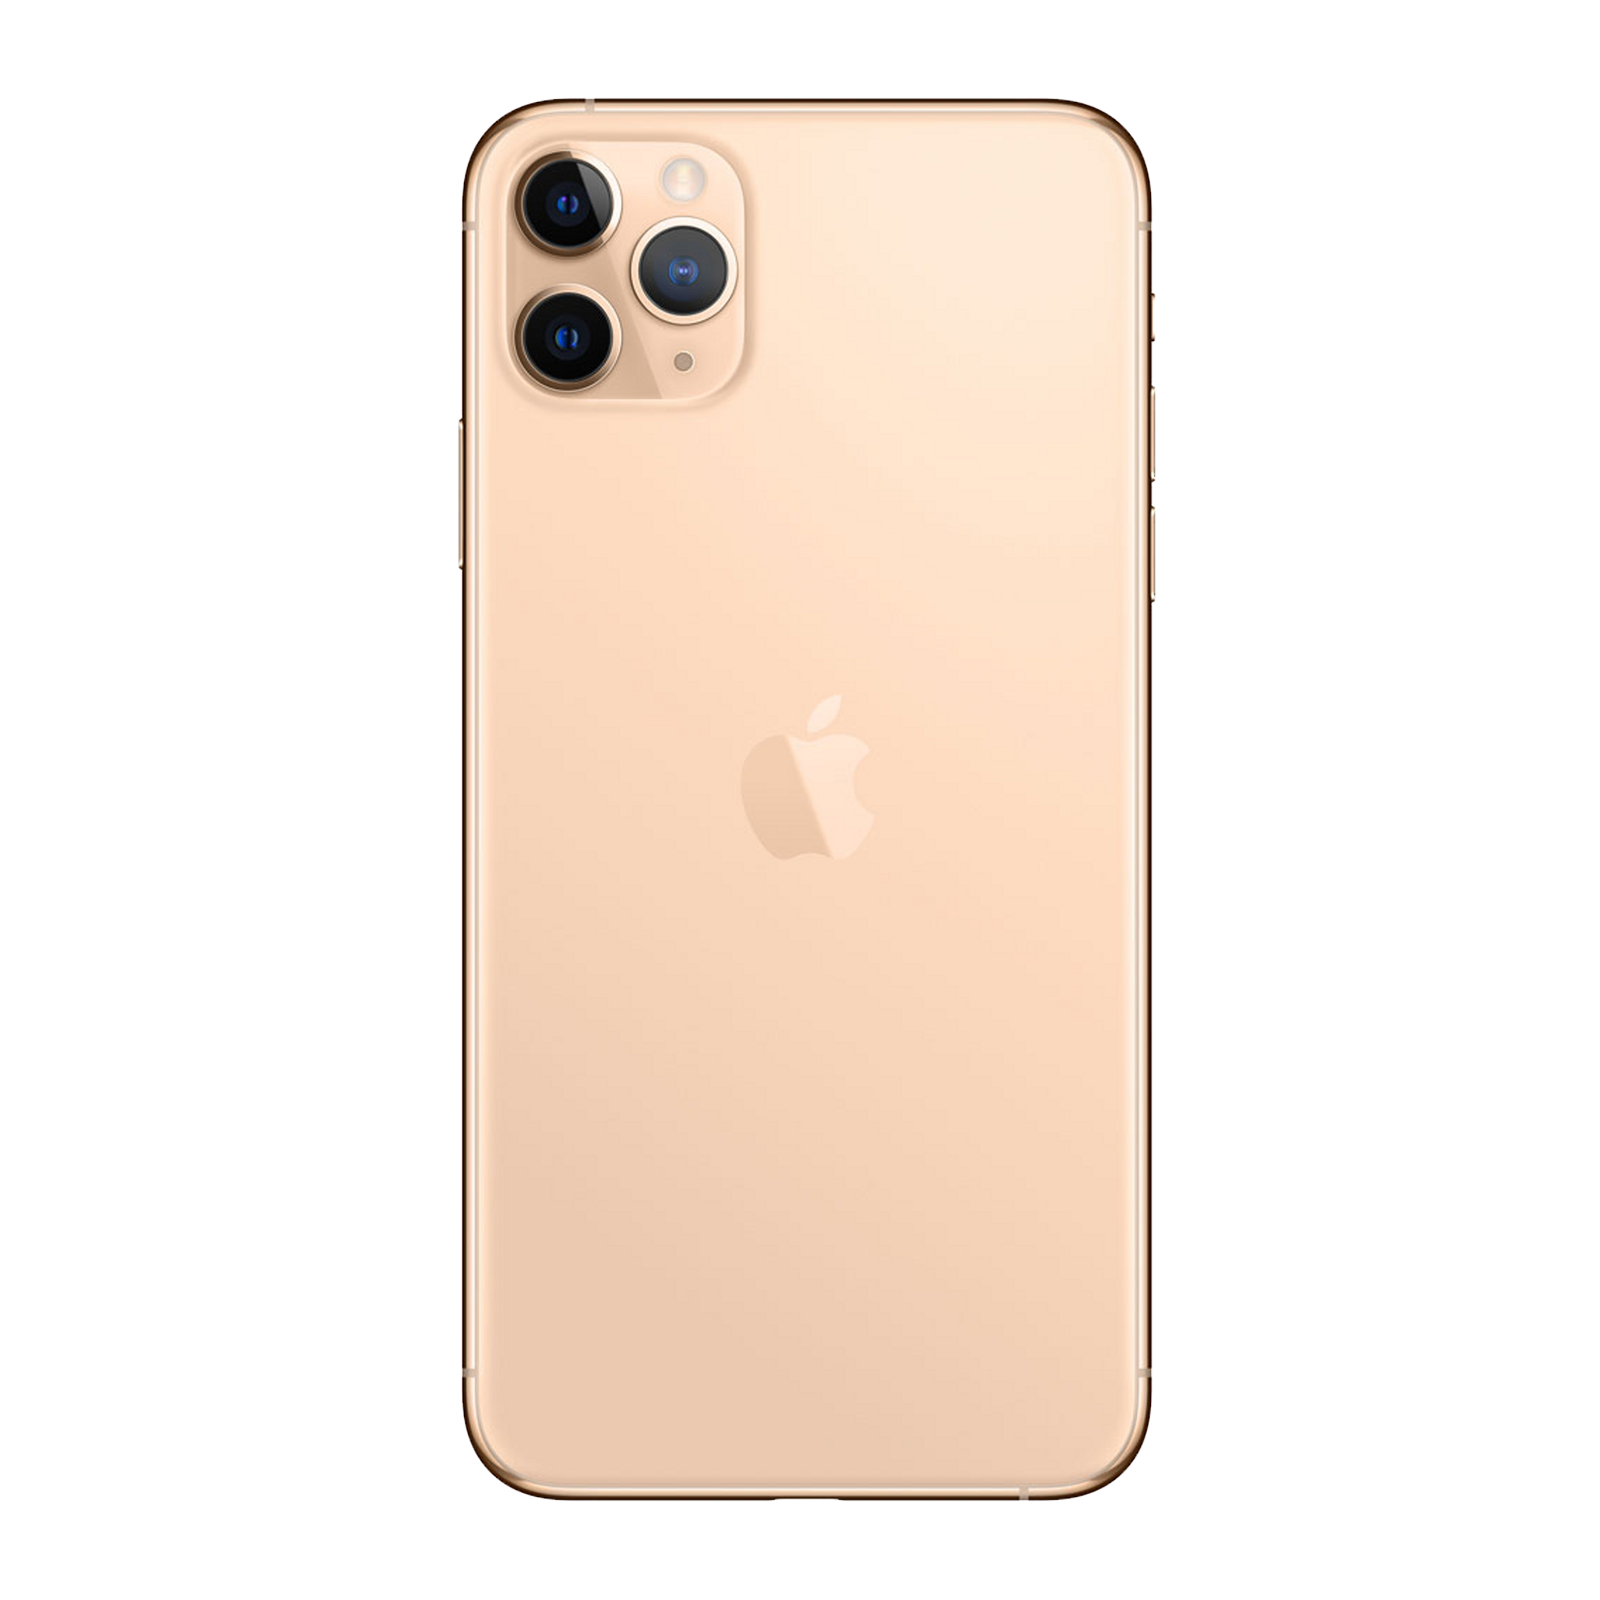 Apple iPhone 11 Pro Max 256GB Gold Good - Verizon